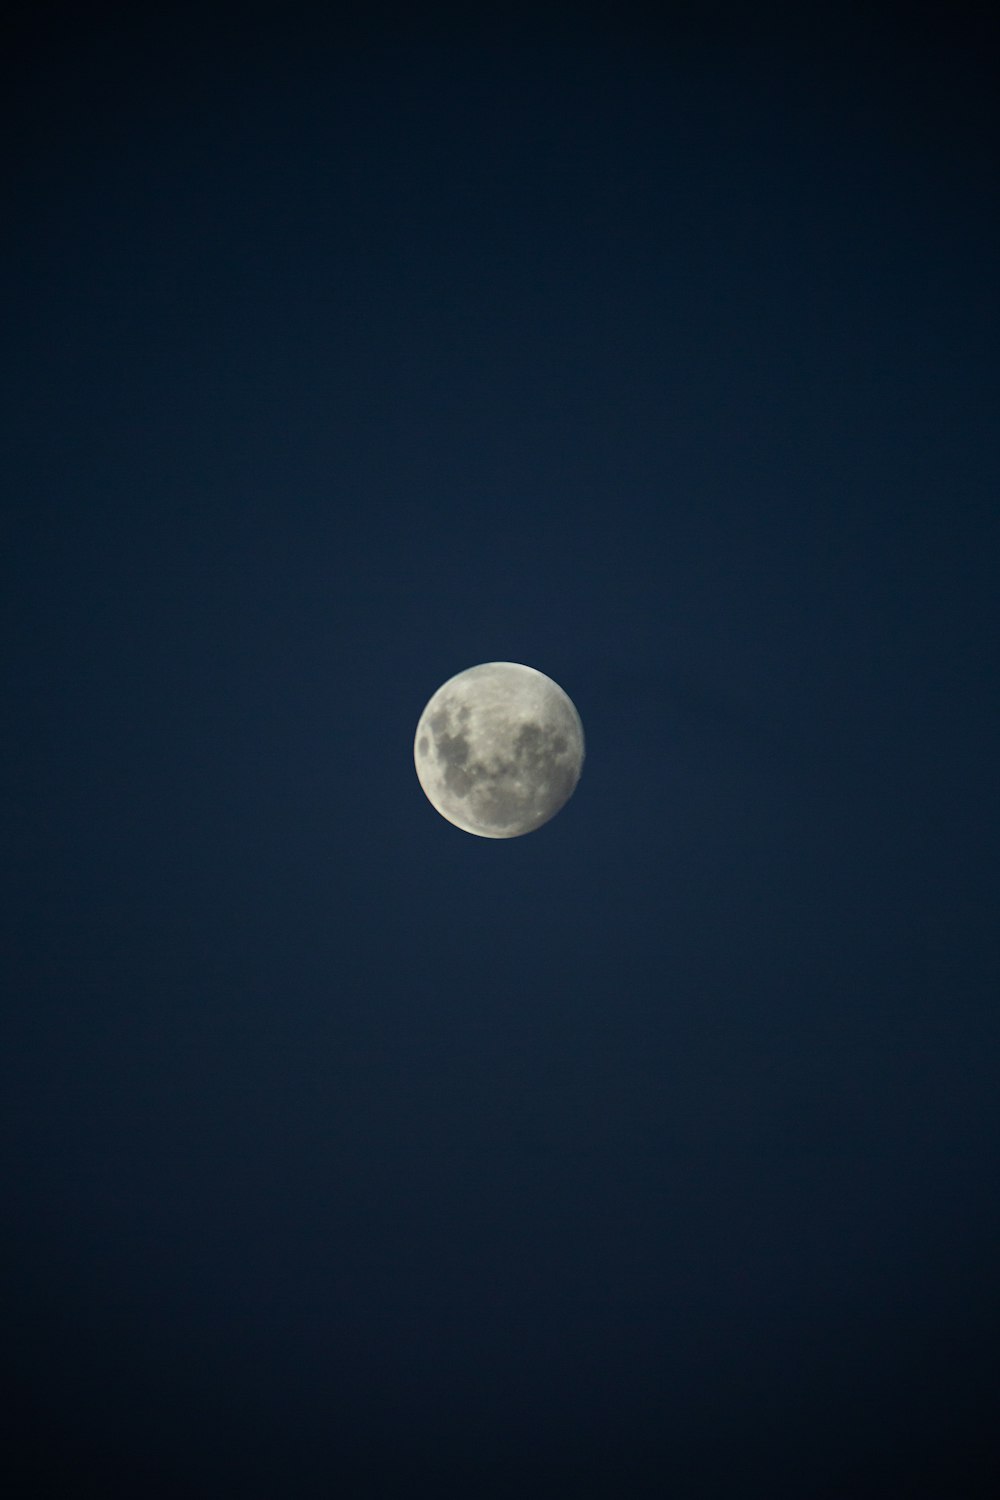 a full moon in a dark blue sky